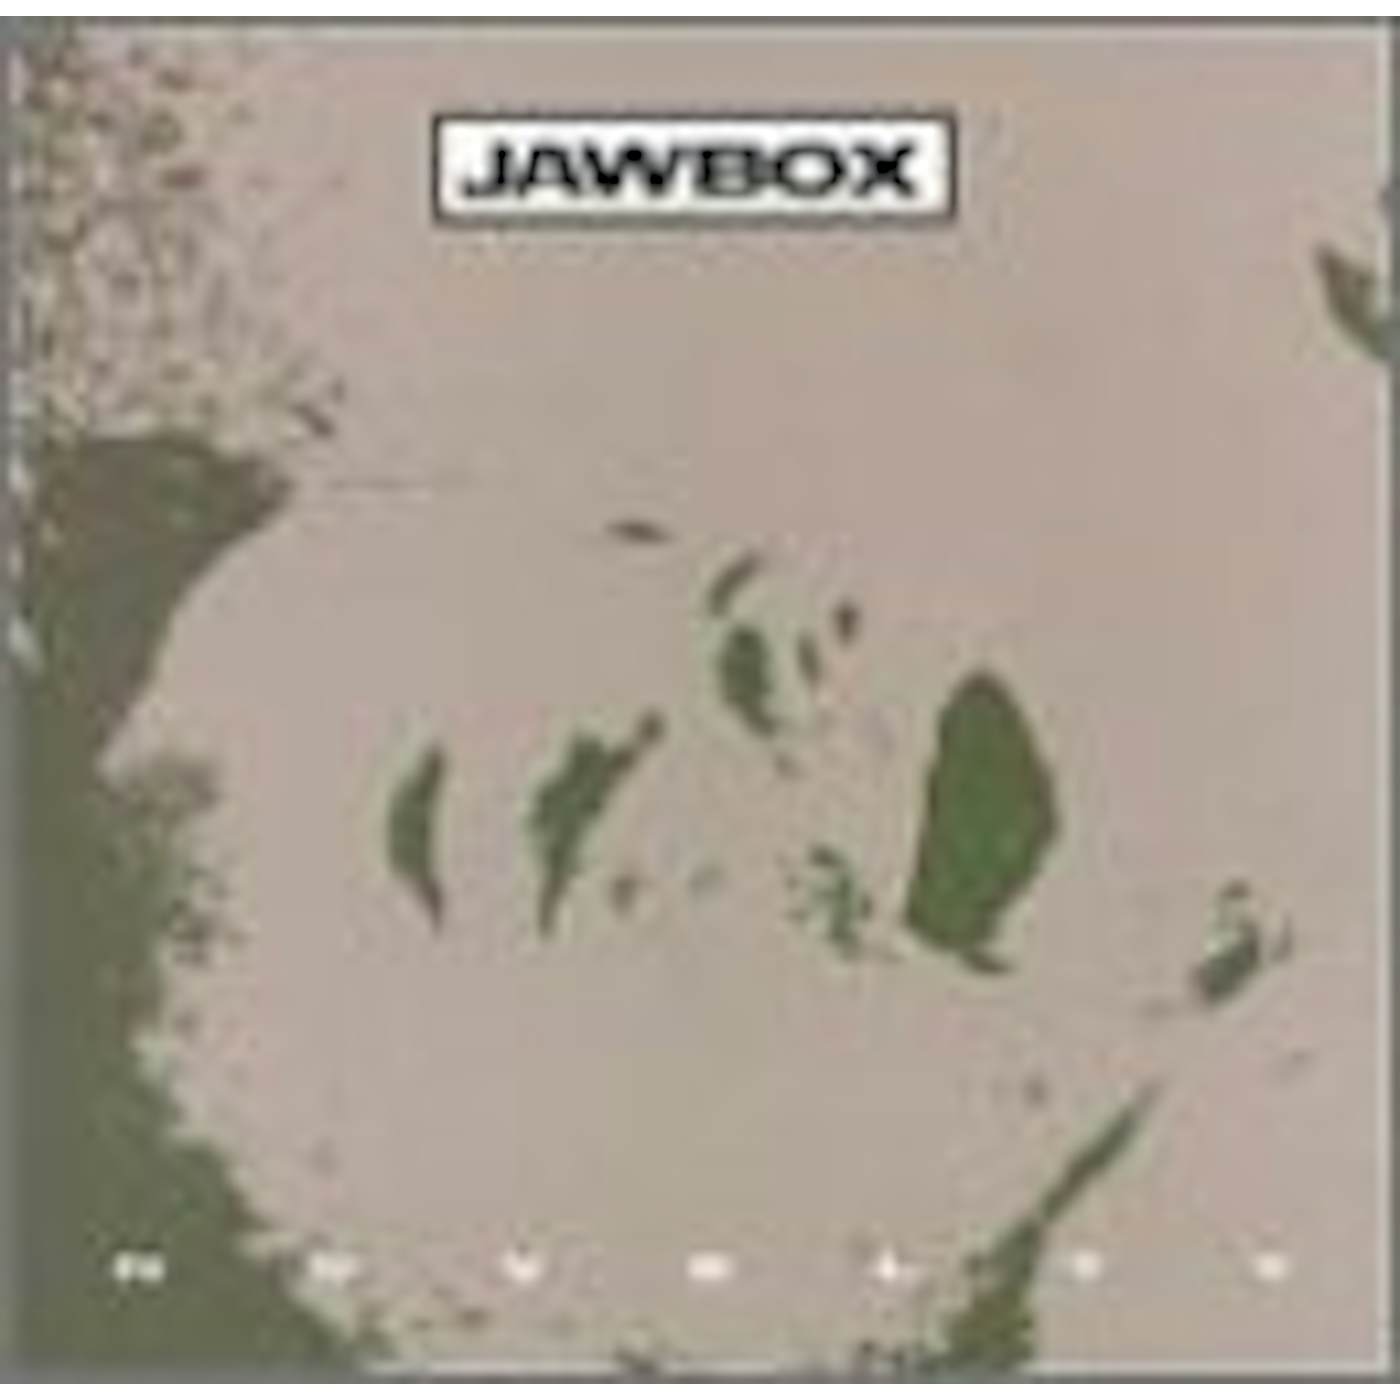 Jawbox NOVELTY CD